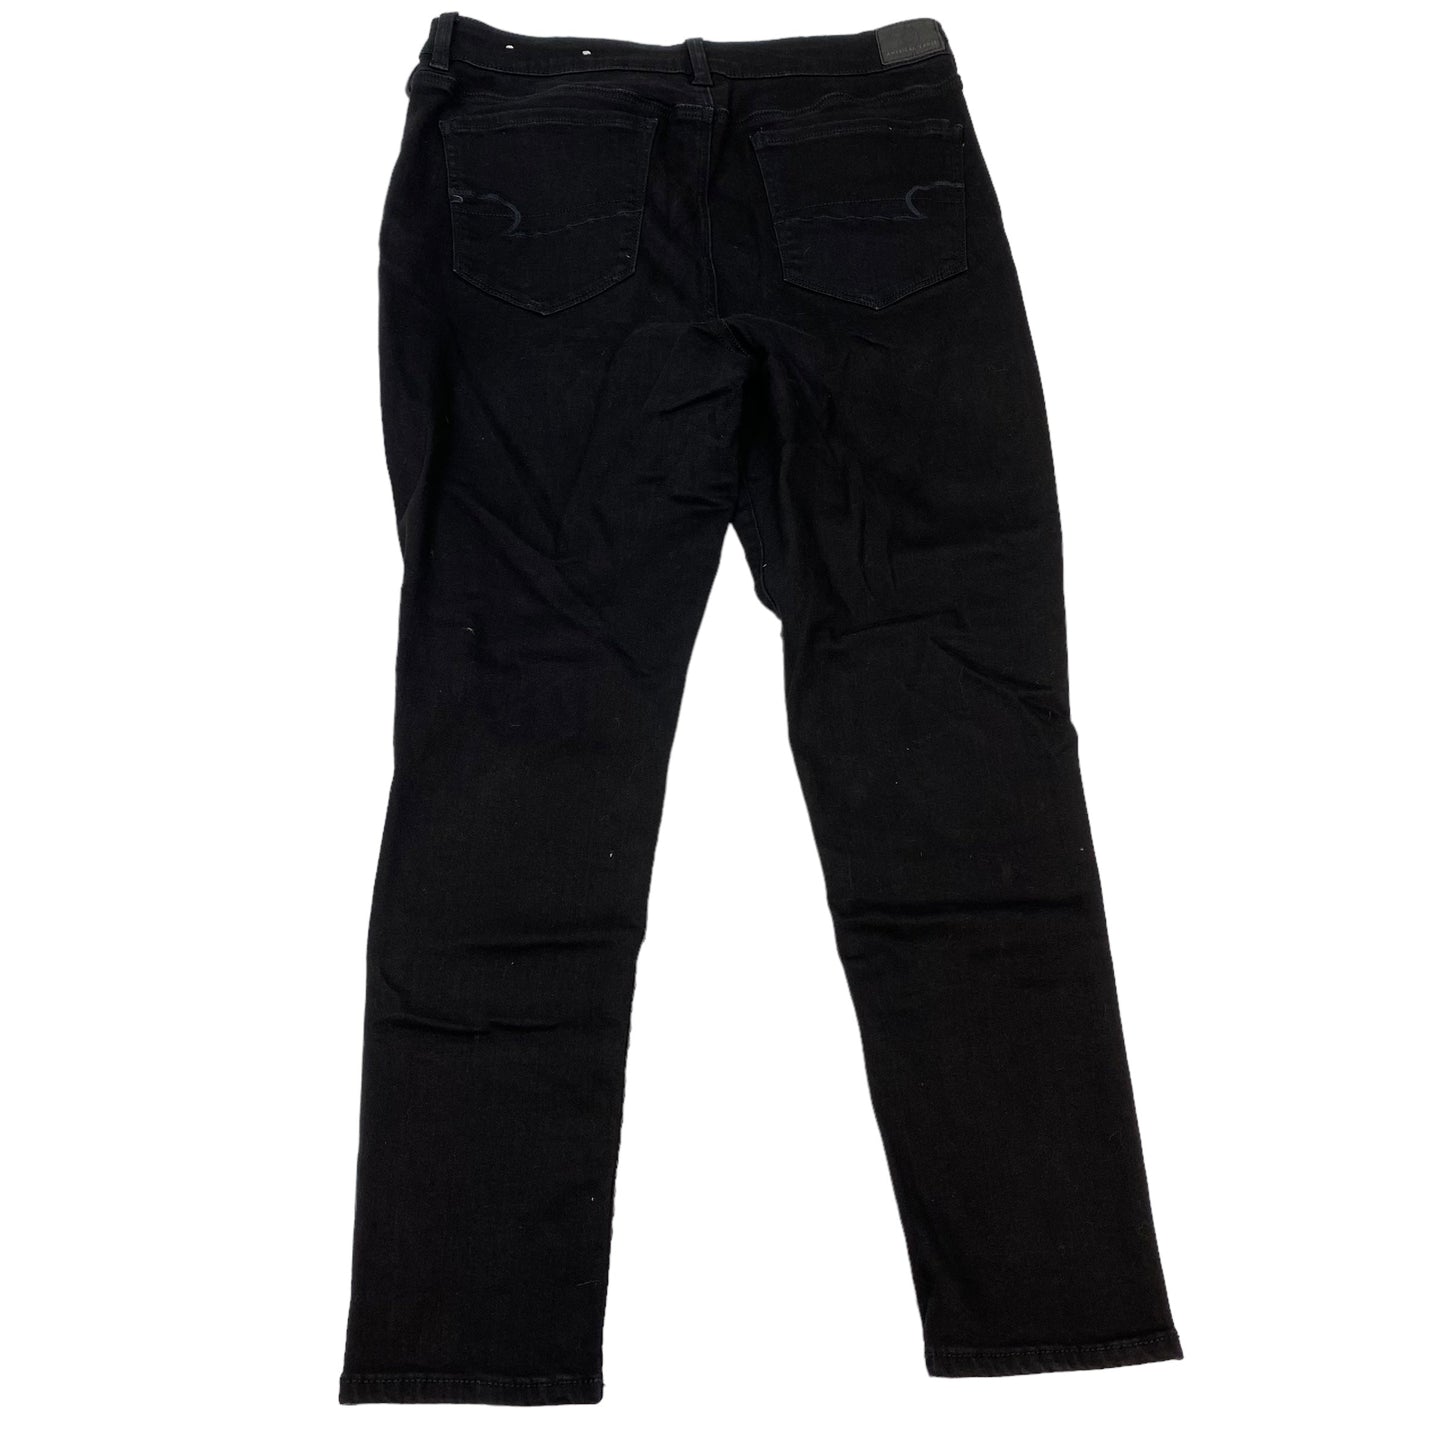 Black Denim Jeans Jeggings American Eagle, Size 16